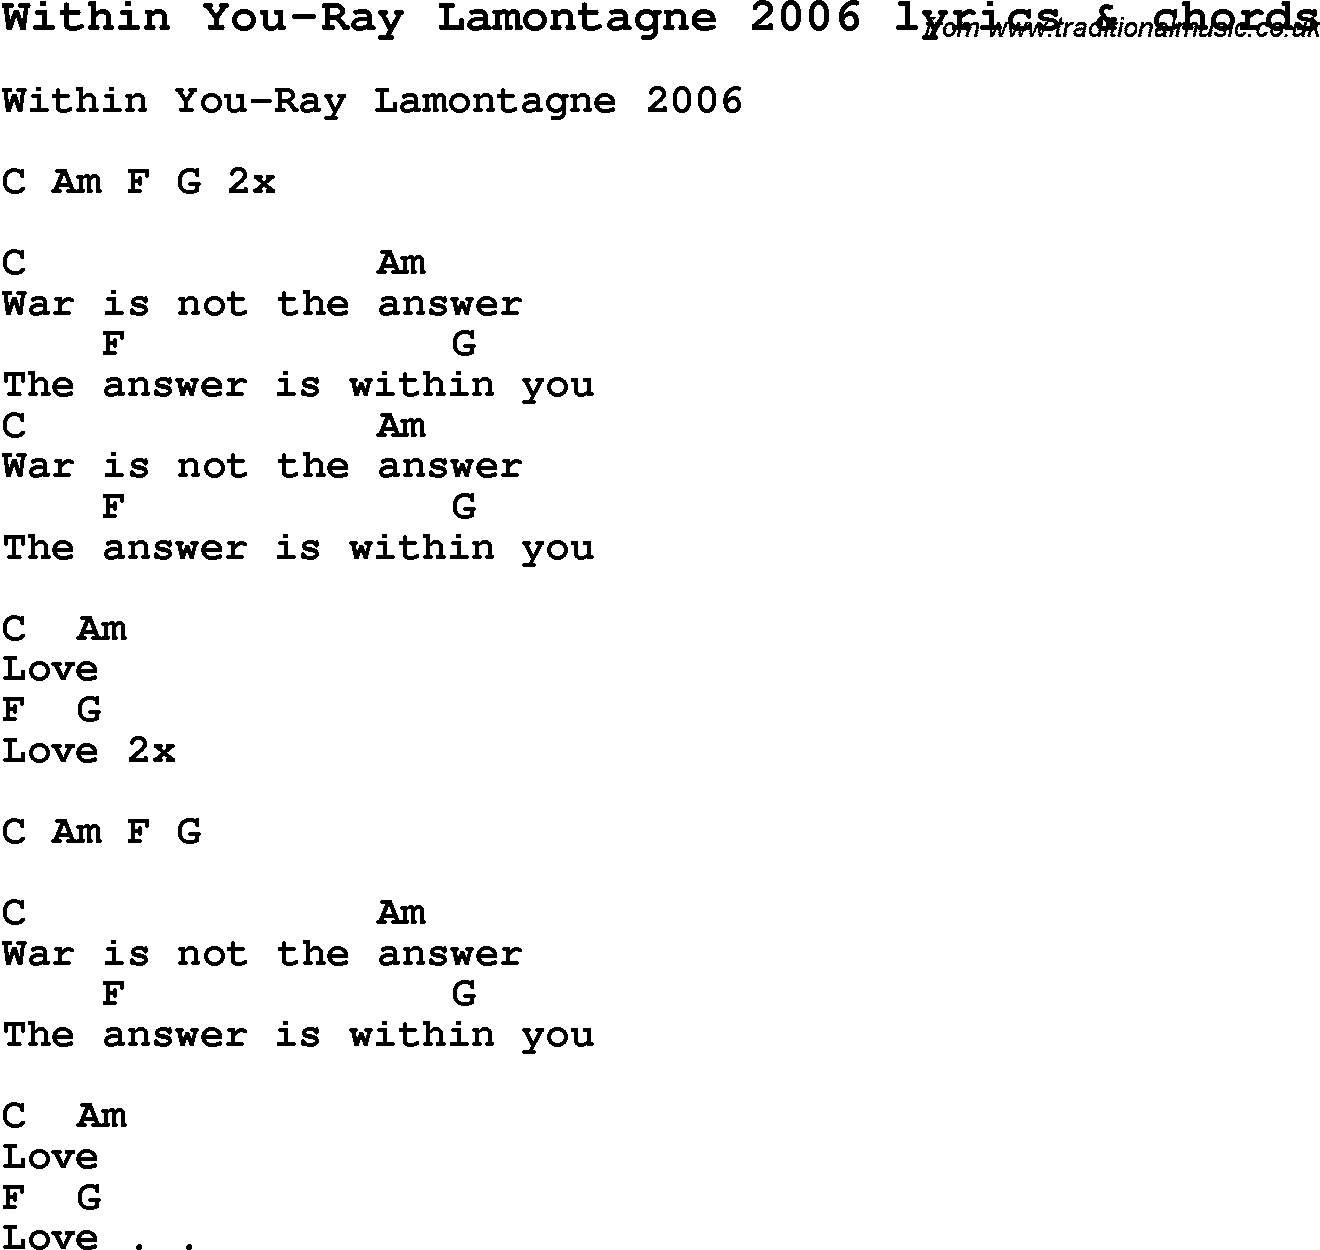 Love Song Lyrics for: Within You-Ray Lamontagne 2006 with chords for Ukulele, Guitar Banjo etc.